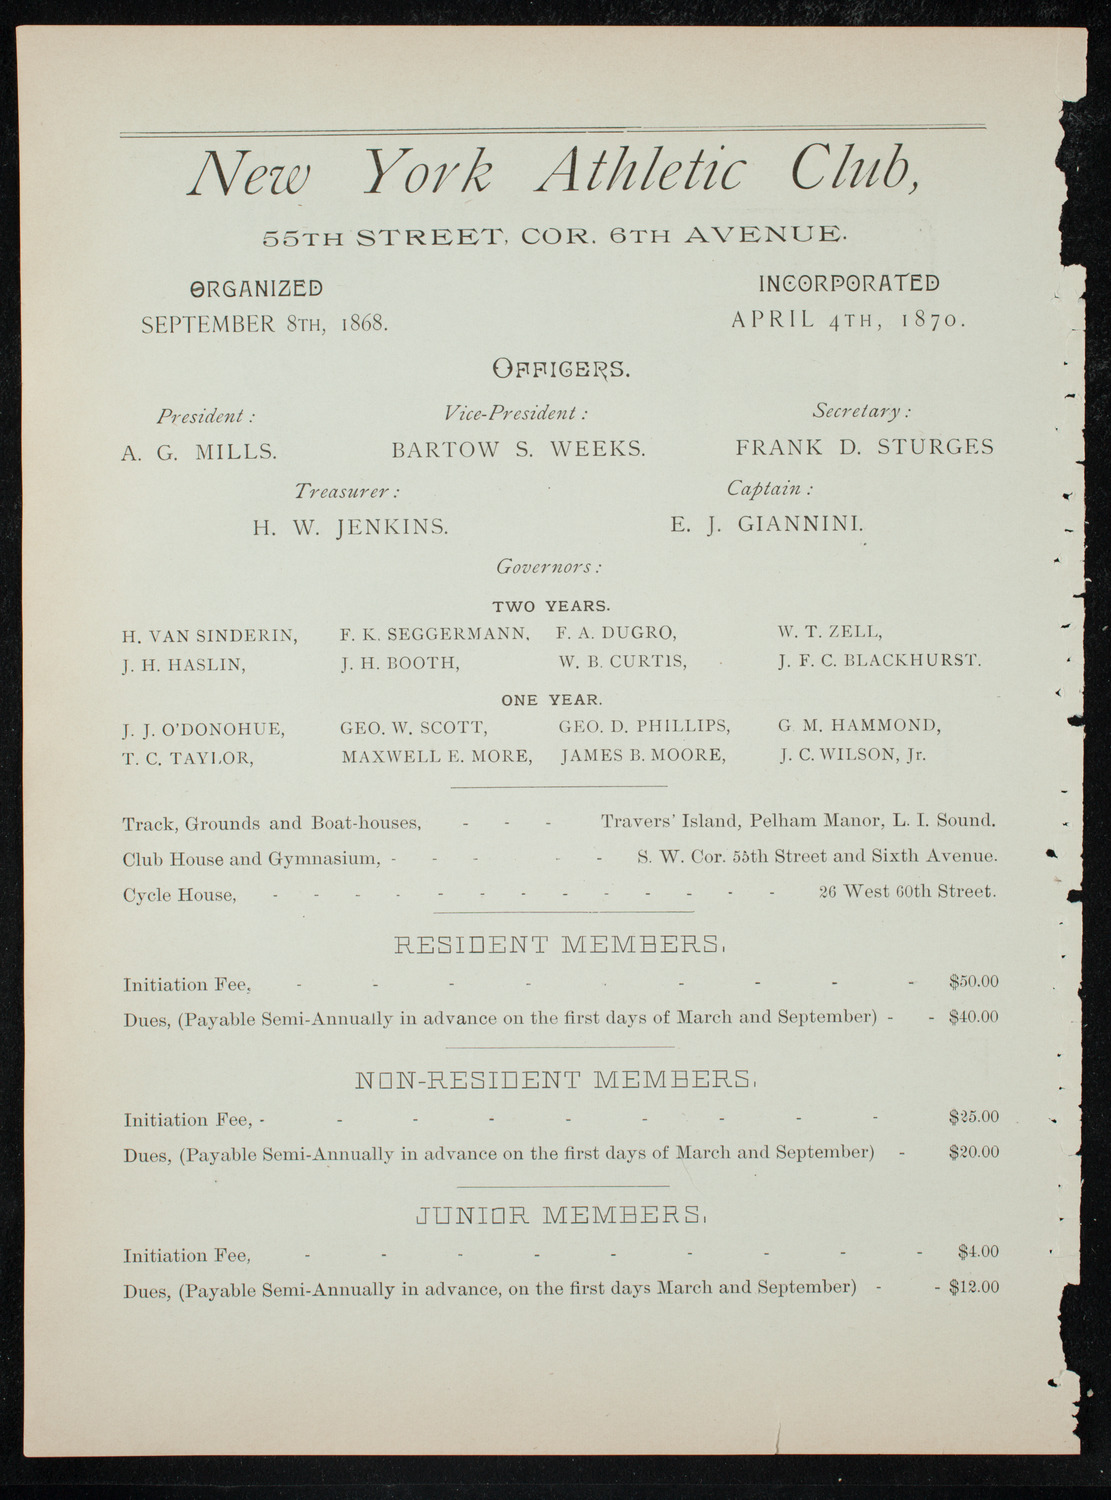 New York Athletic Club Amateur Minstrel Show, December 12, 1891, program page 10